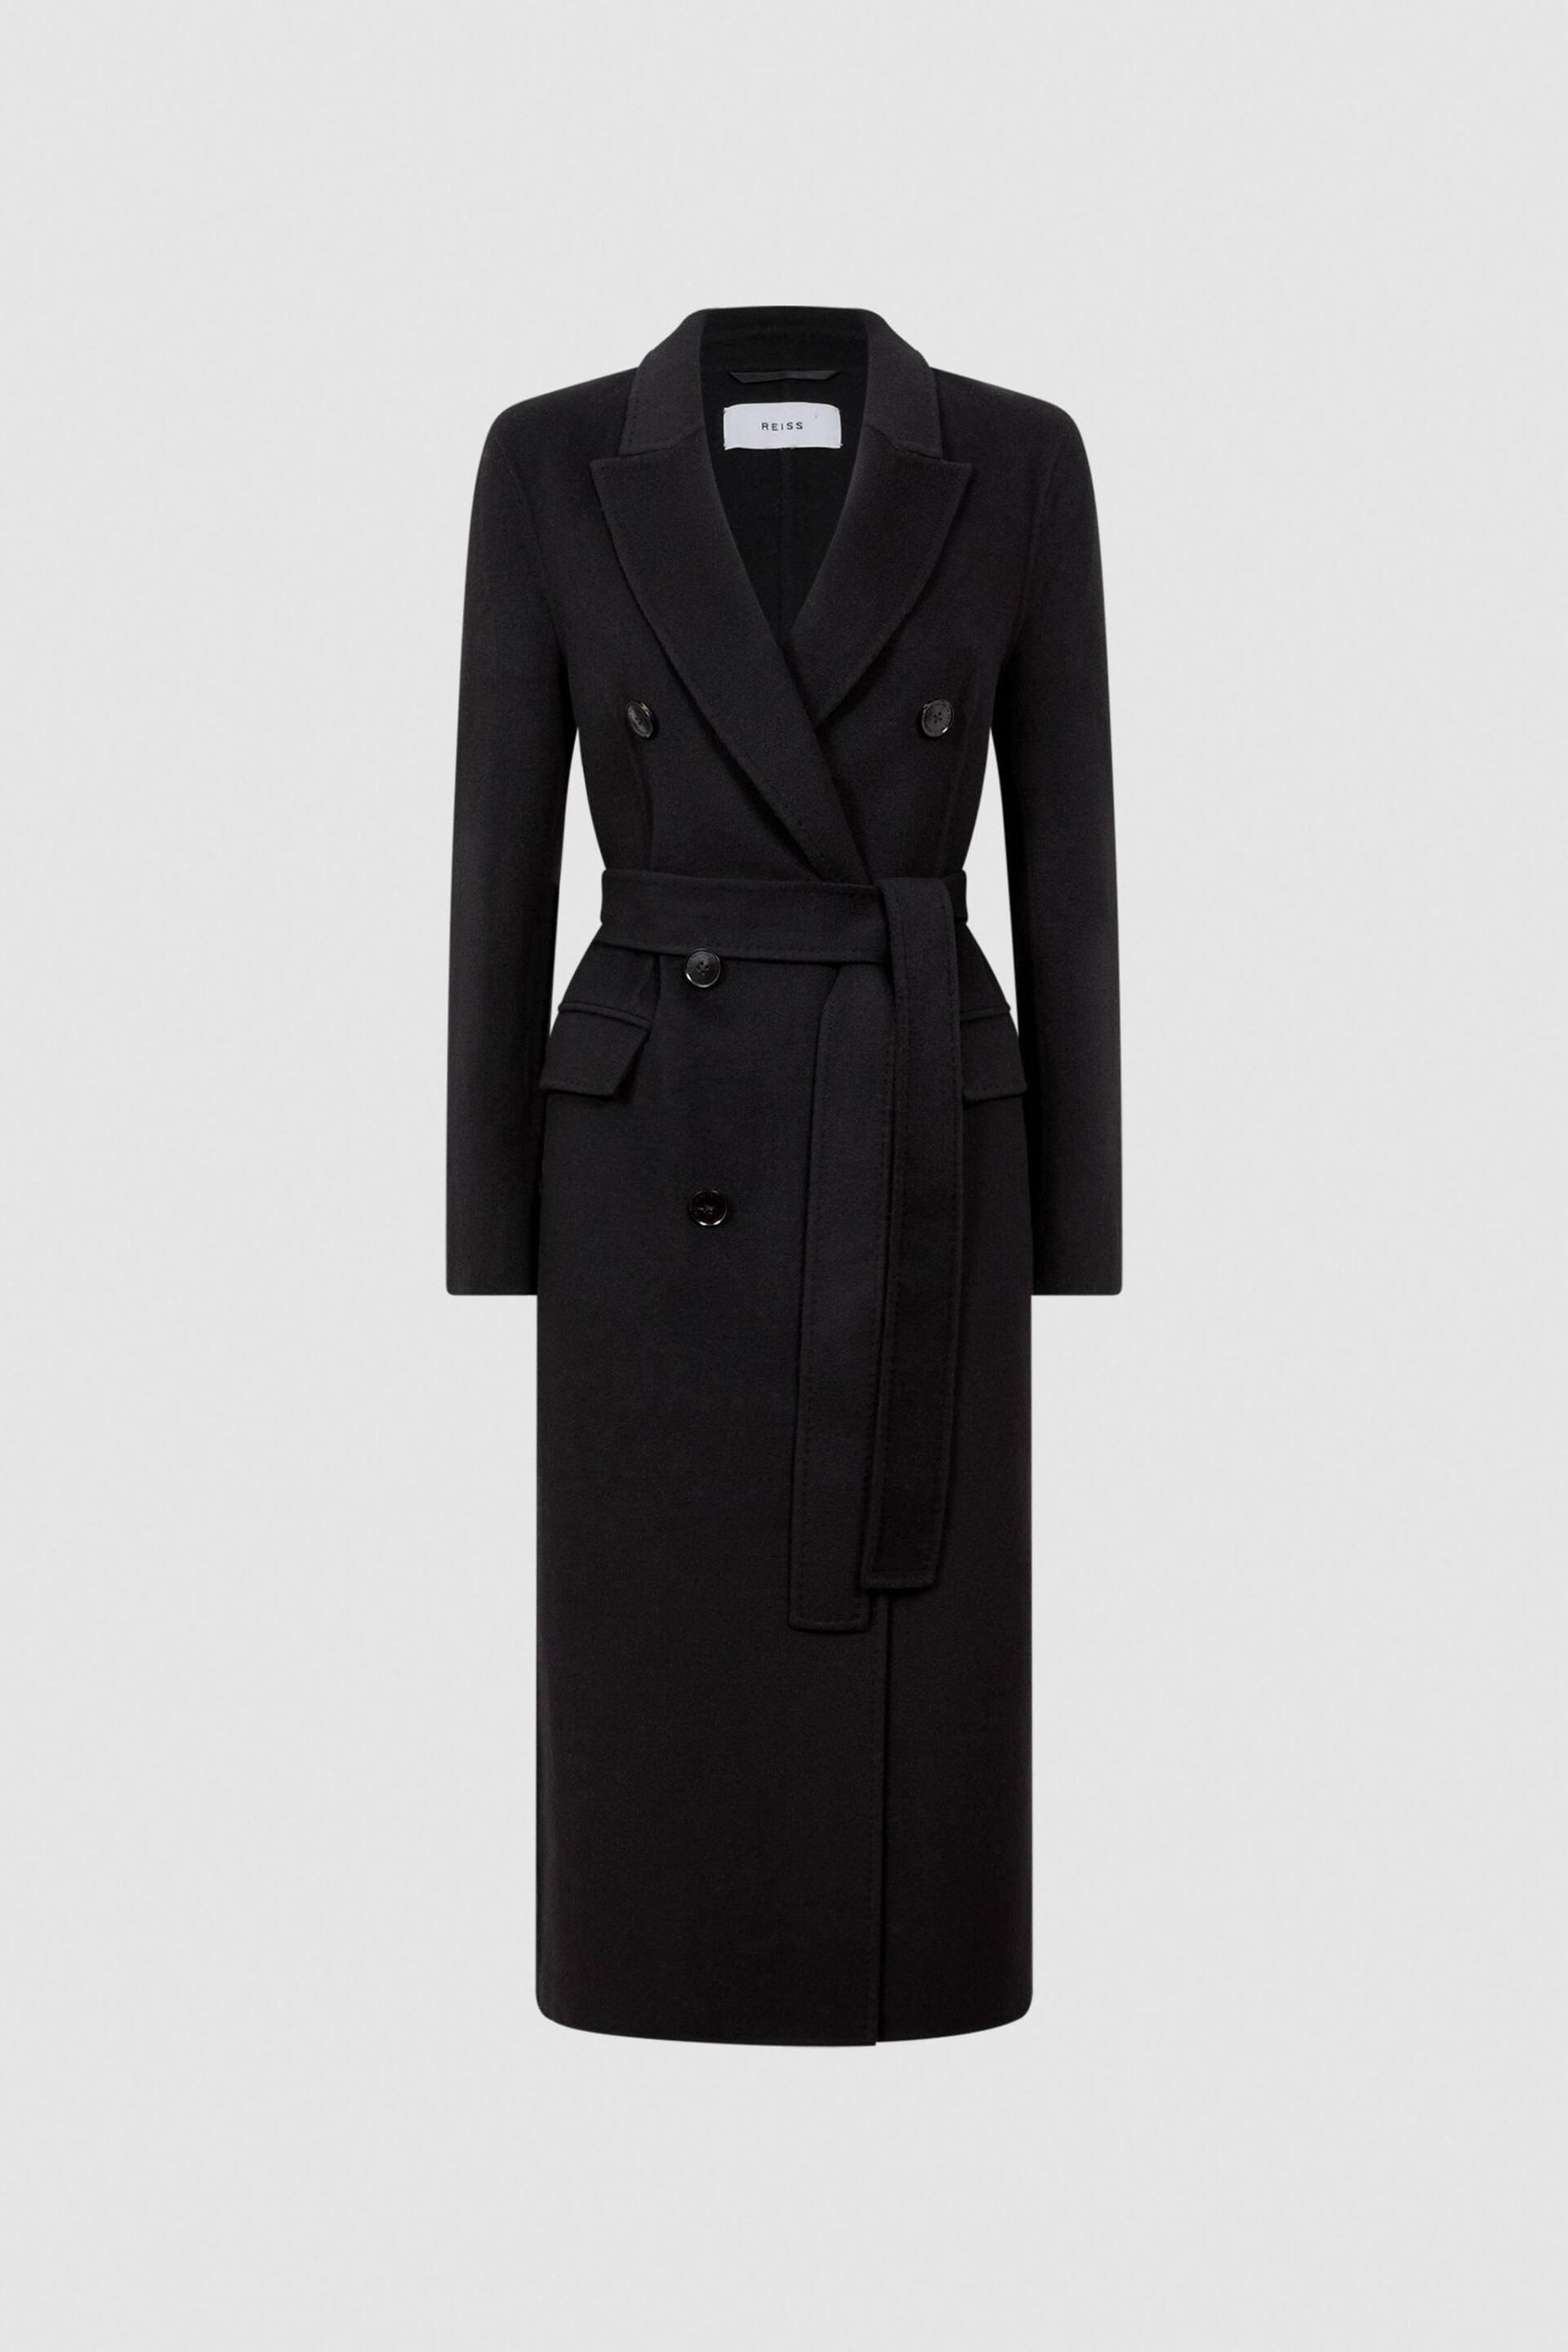 Reiss Black Arla Petite Relaxed Wool Blend Blindseam Belted Coat - Image 2 of 6